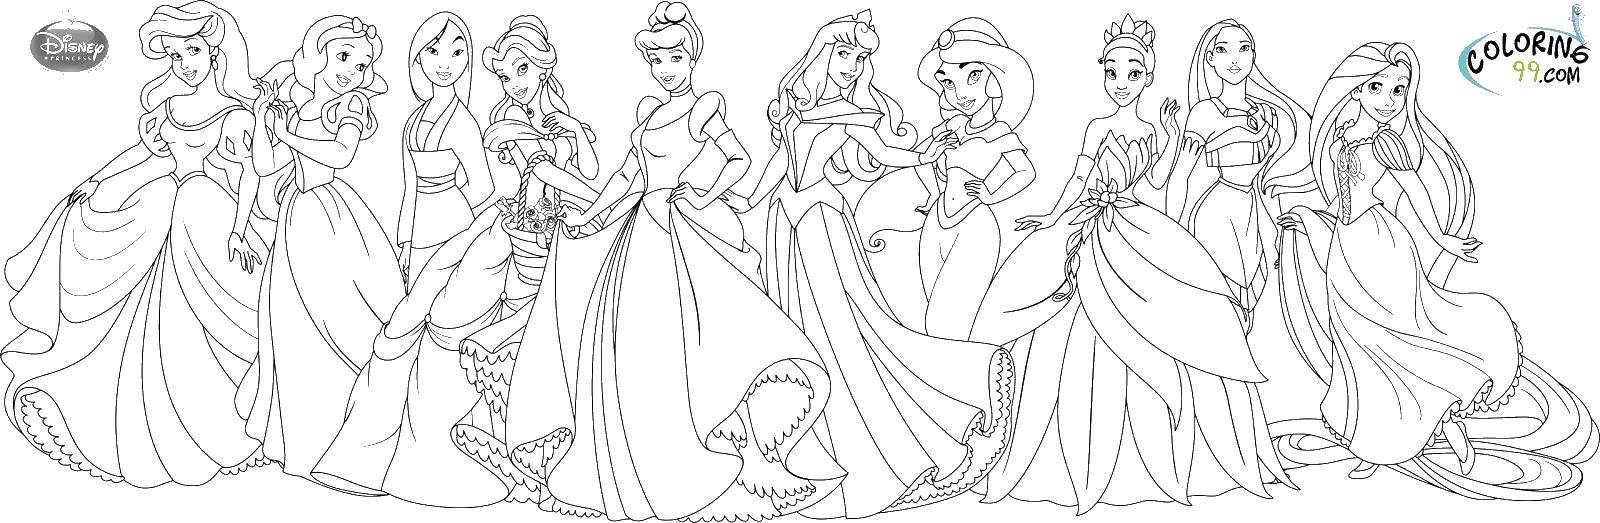 Coloring All disney Princess. Category Princess. Tags:  Princess, disney.